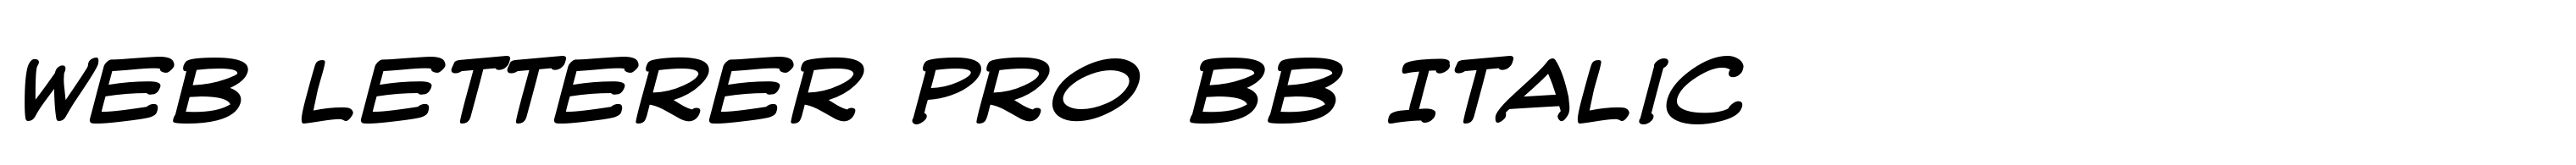 Web Letterer Pro BB Italic